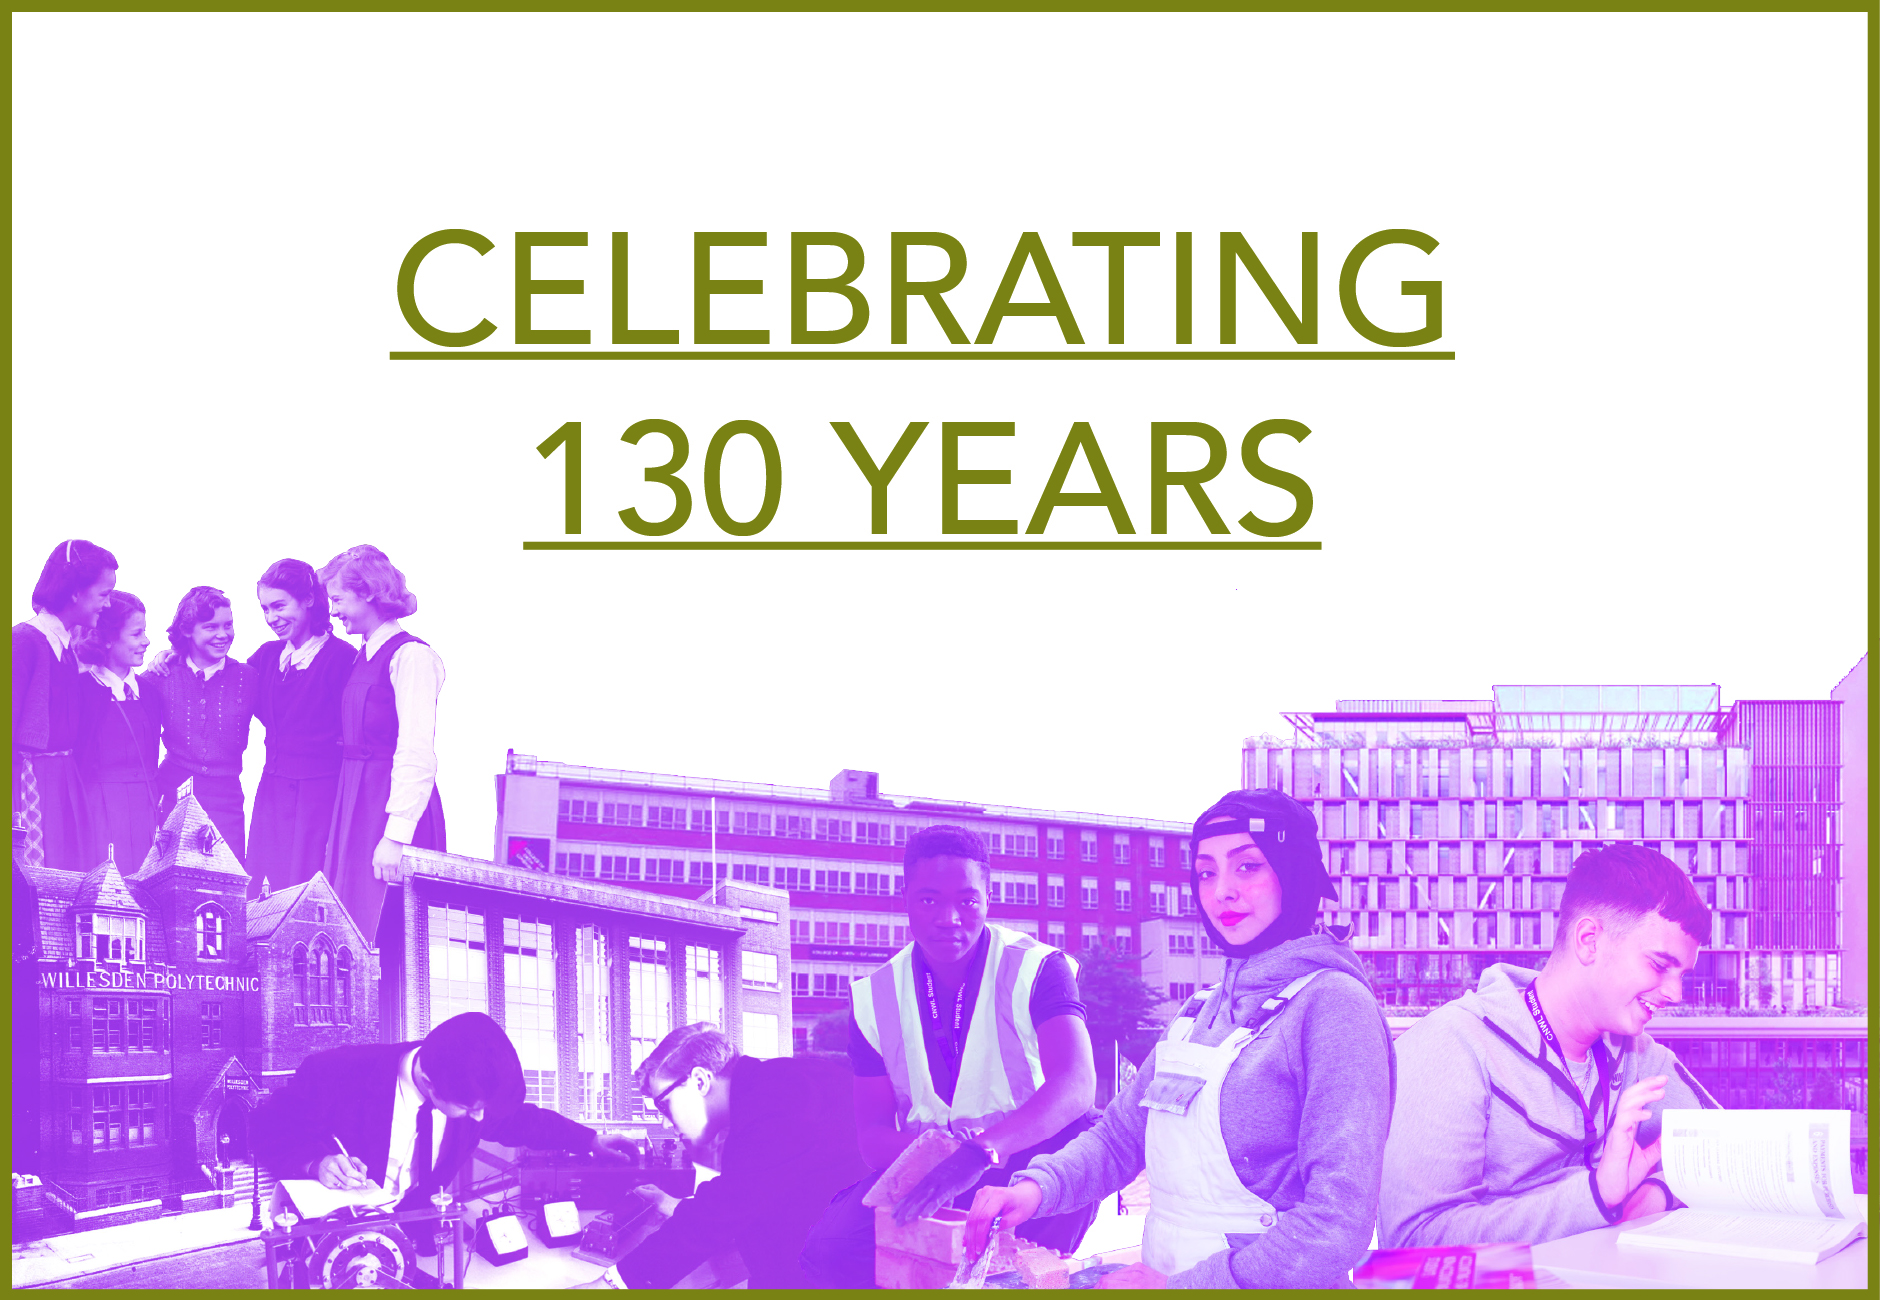 Celebrating 130 years at CNWL - Tile